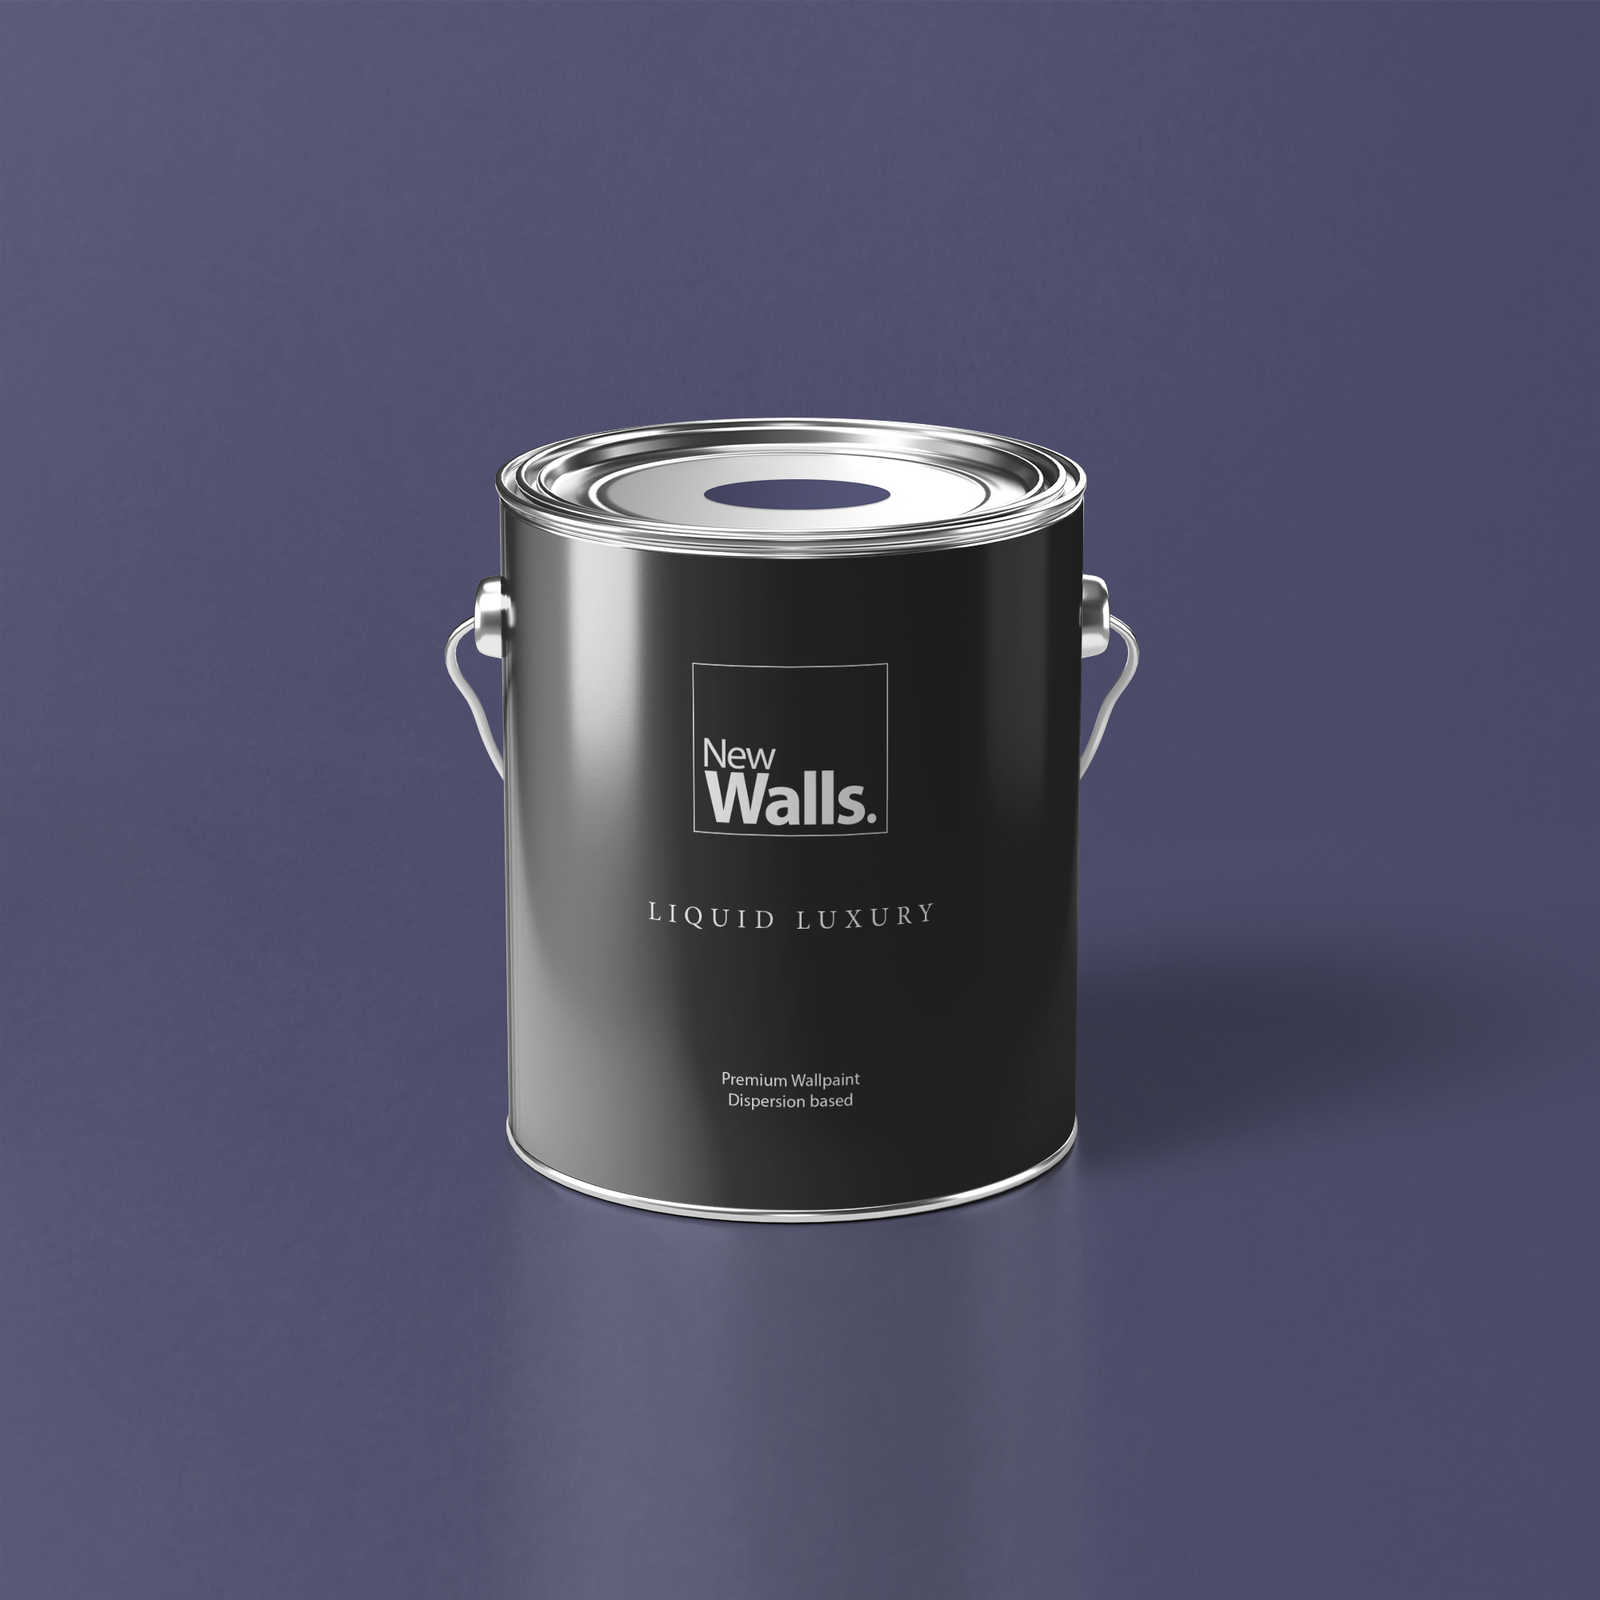 Premium Wall Paint Heavenly Dukellila »Magical Mauve« NW205 – 5 litre
